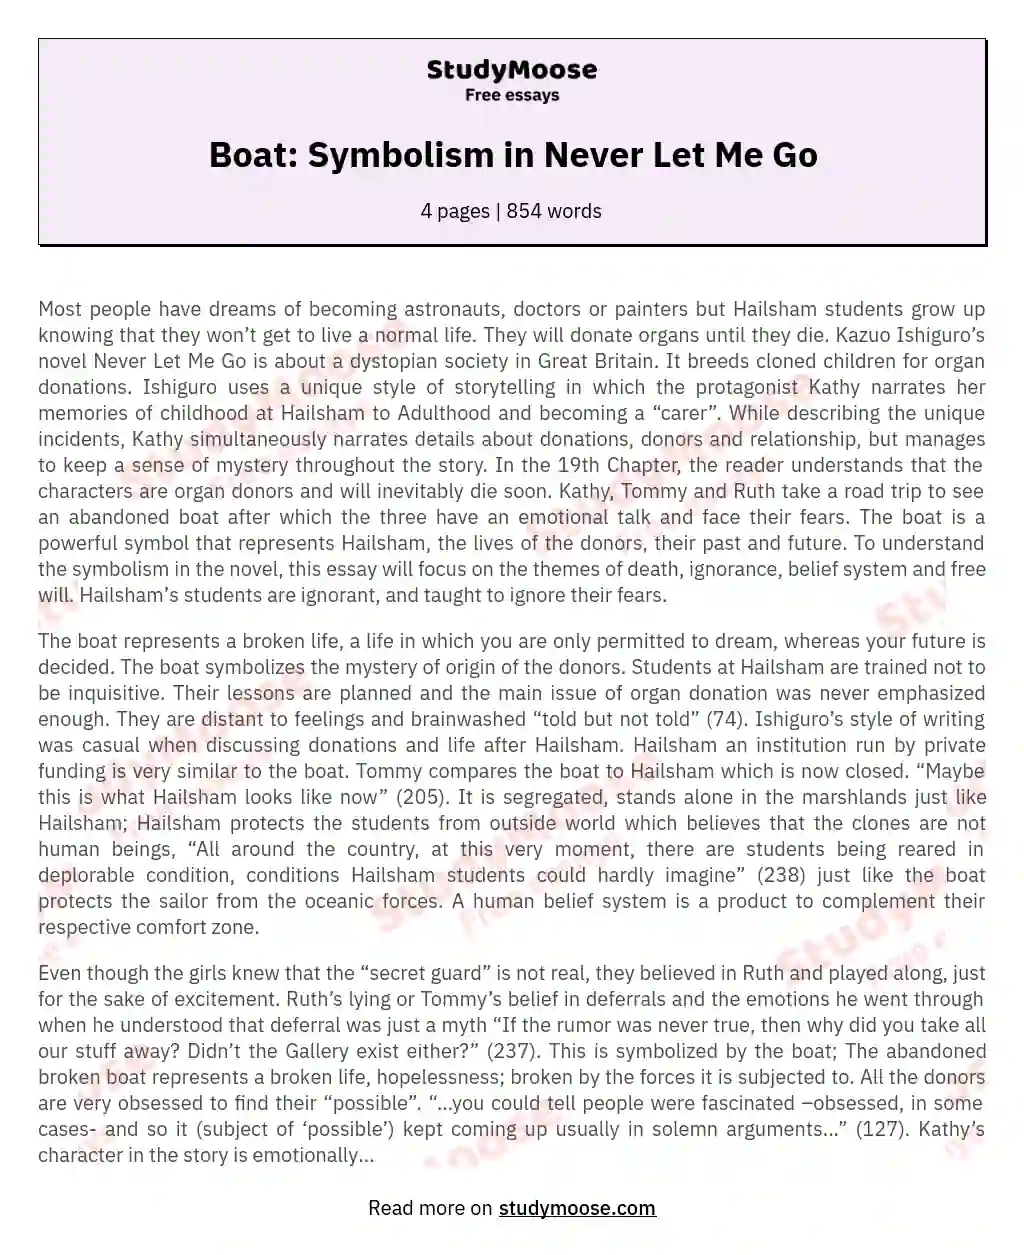 Boat: Symbolism in Never Let Me Go essay